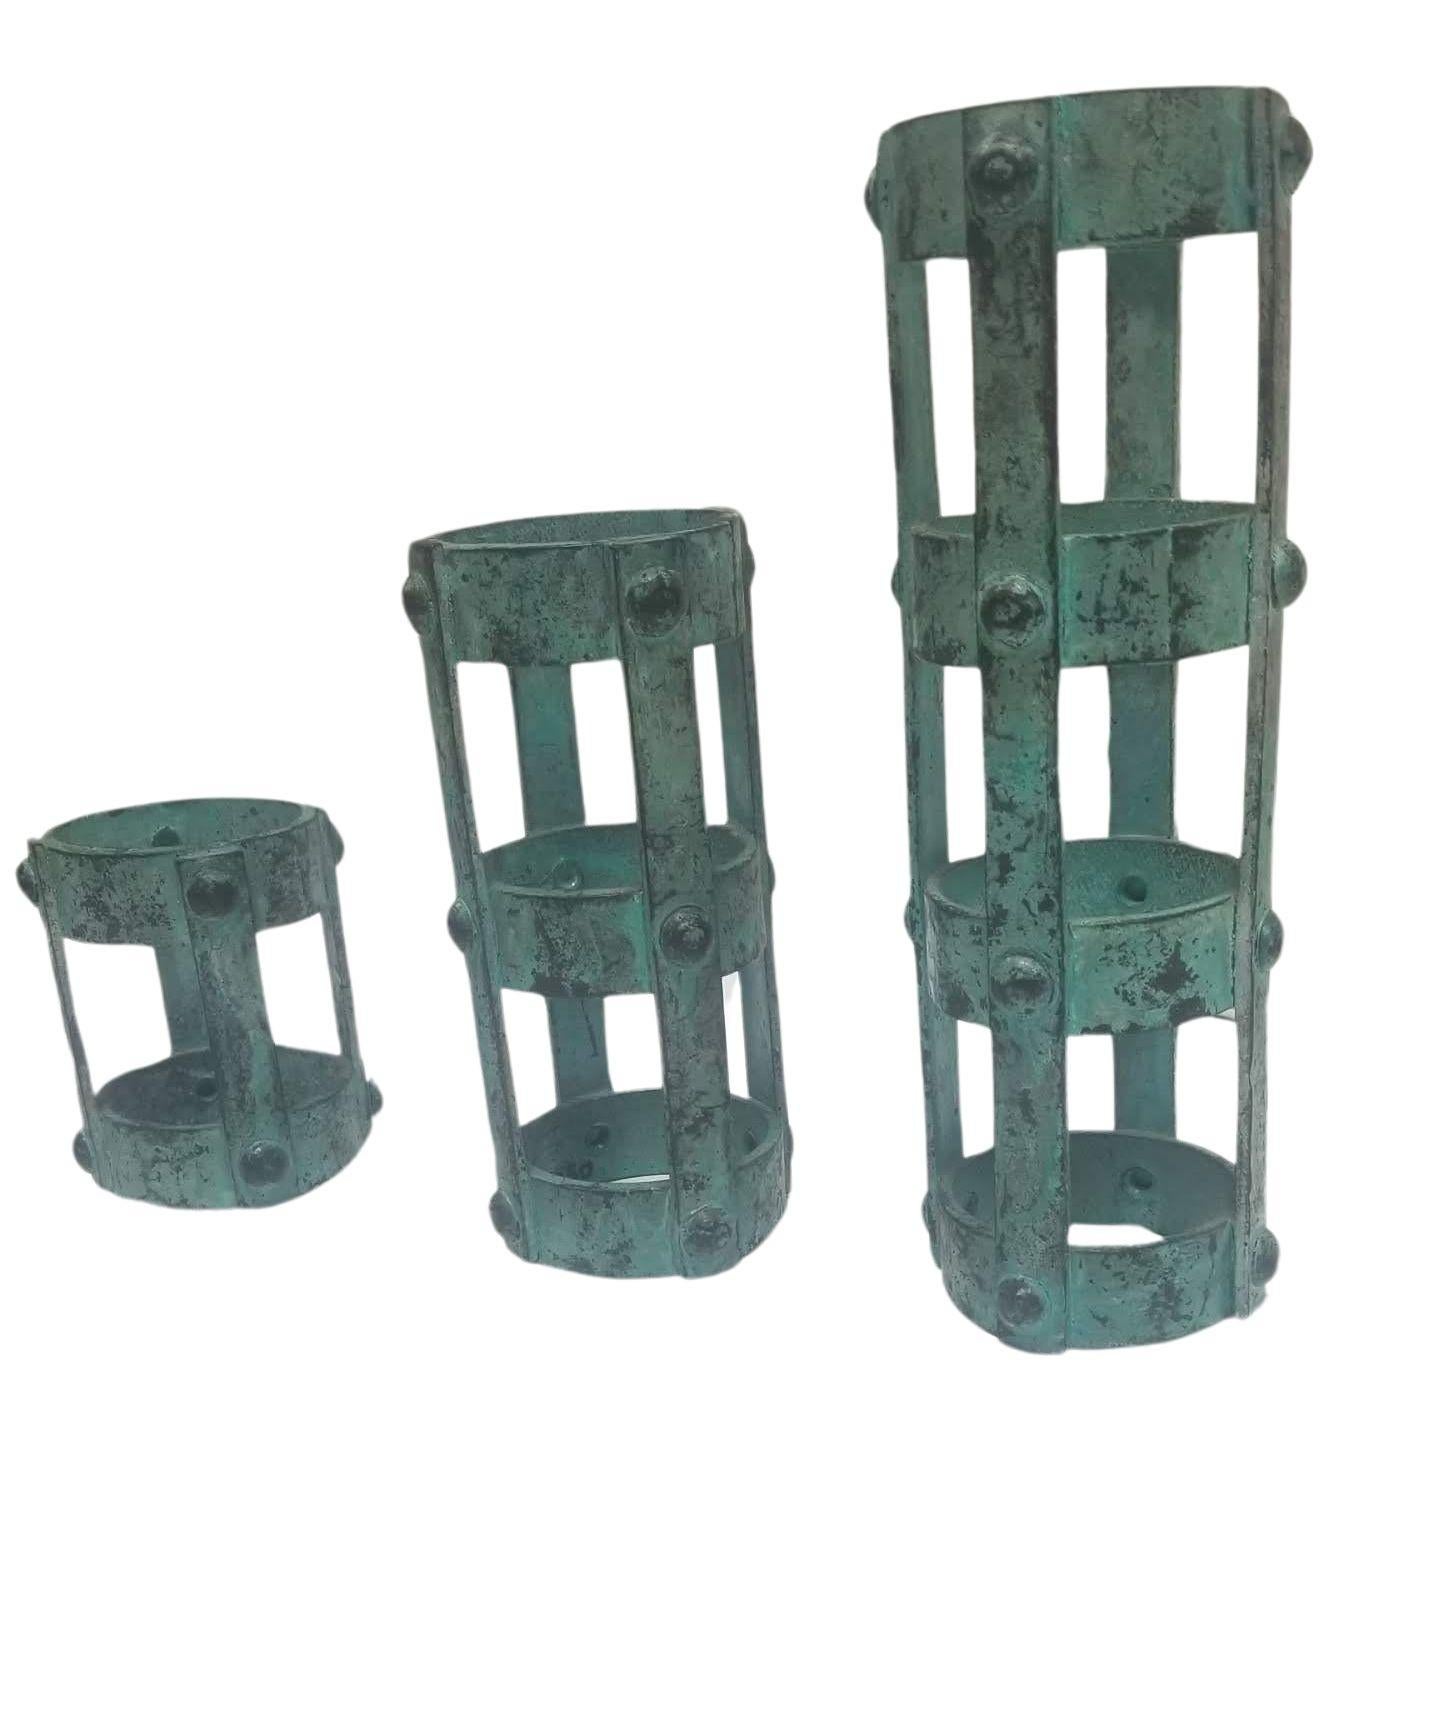 Set of 3 Brutalist style Candlestick Holders Cage Design For Sale 1